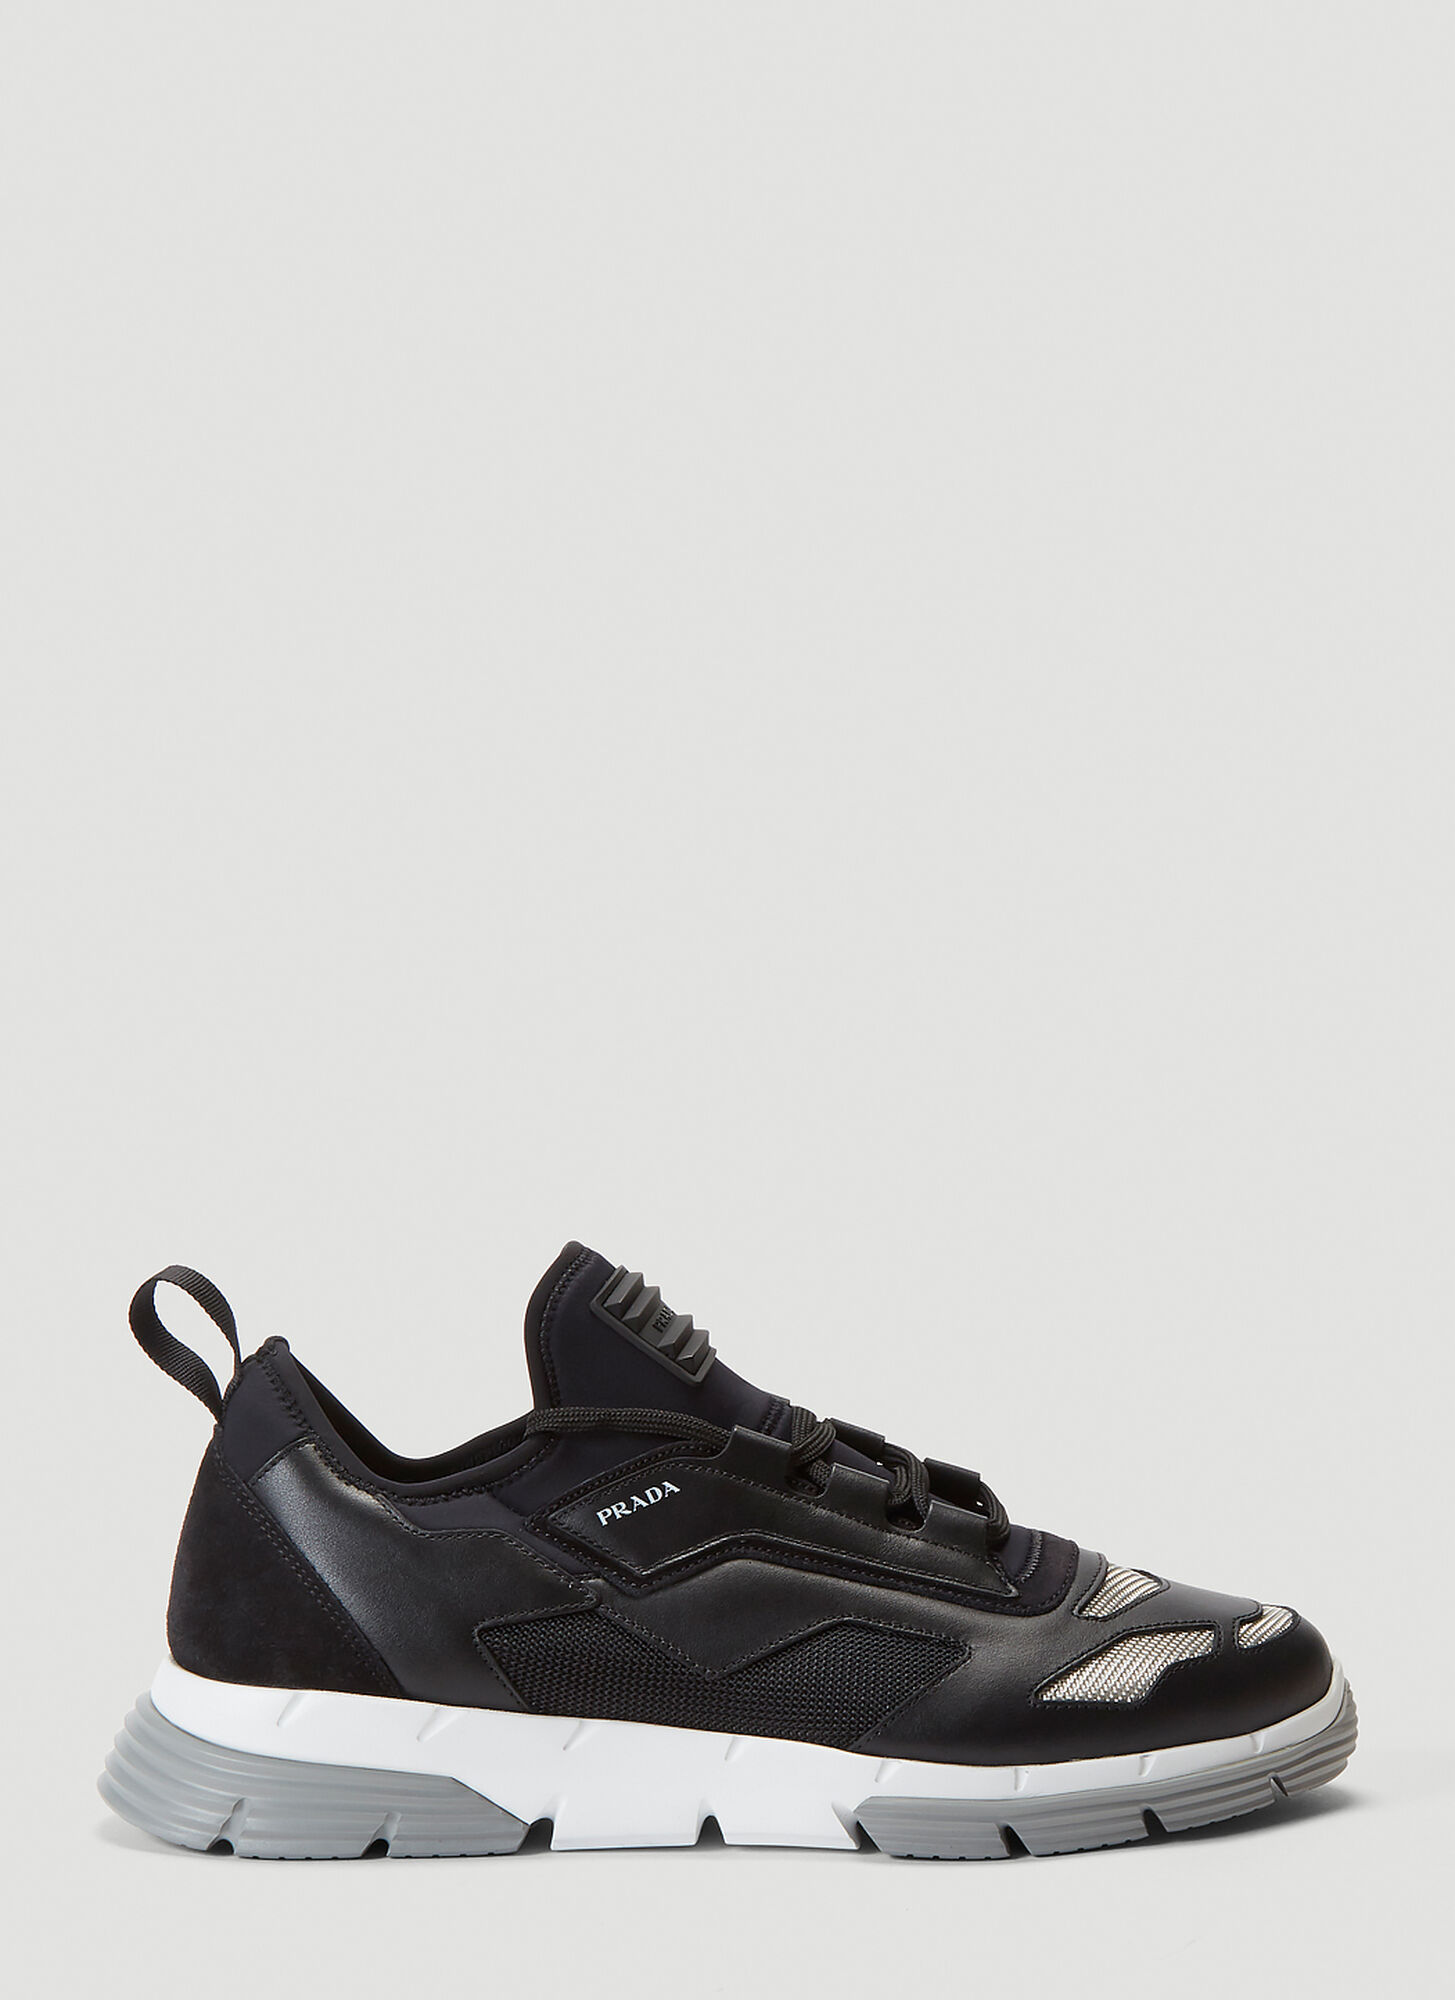 Prada Twist Sneakers in Black size UK - 10 | The Fashionisto